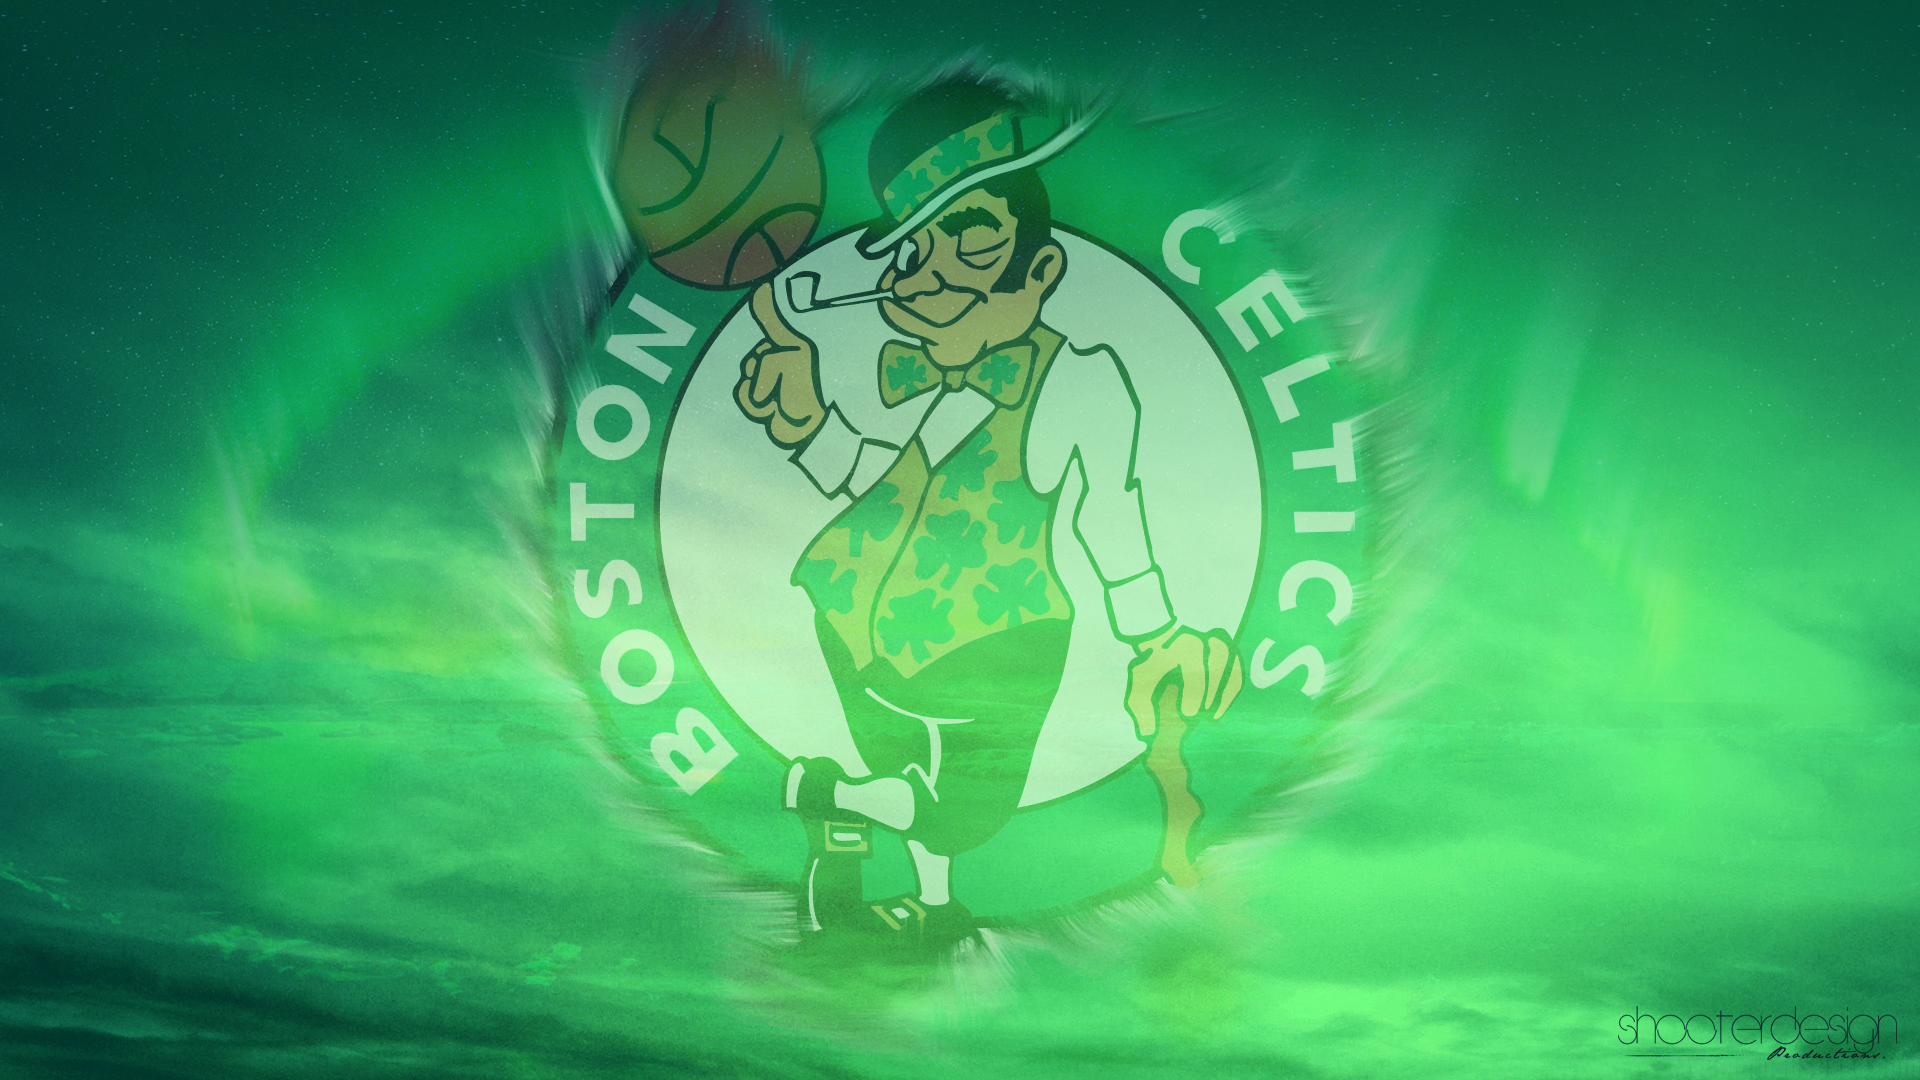 Free download Boston Celtics Logo Wallpapers image 1920x1080 for your Deskt...